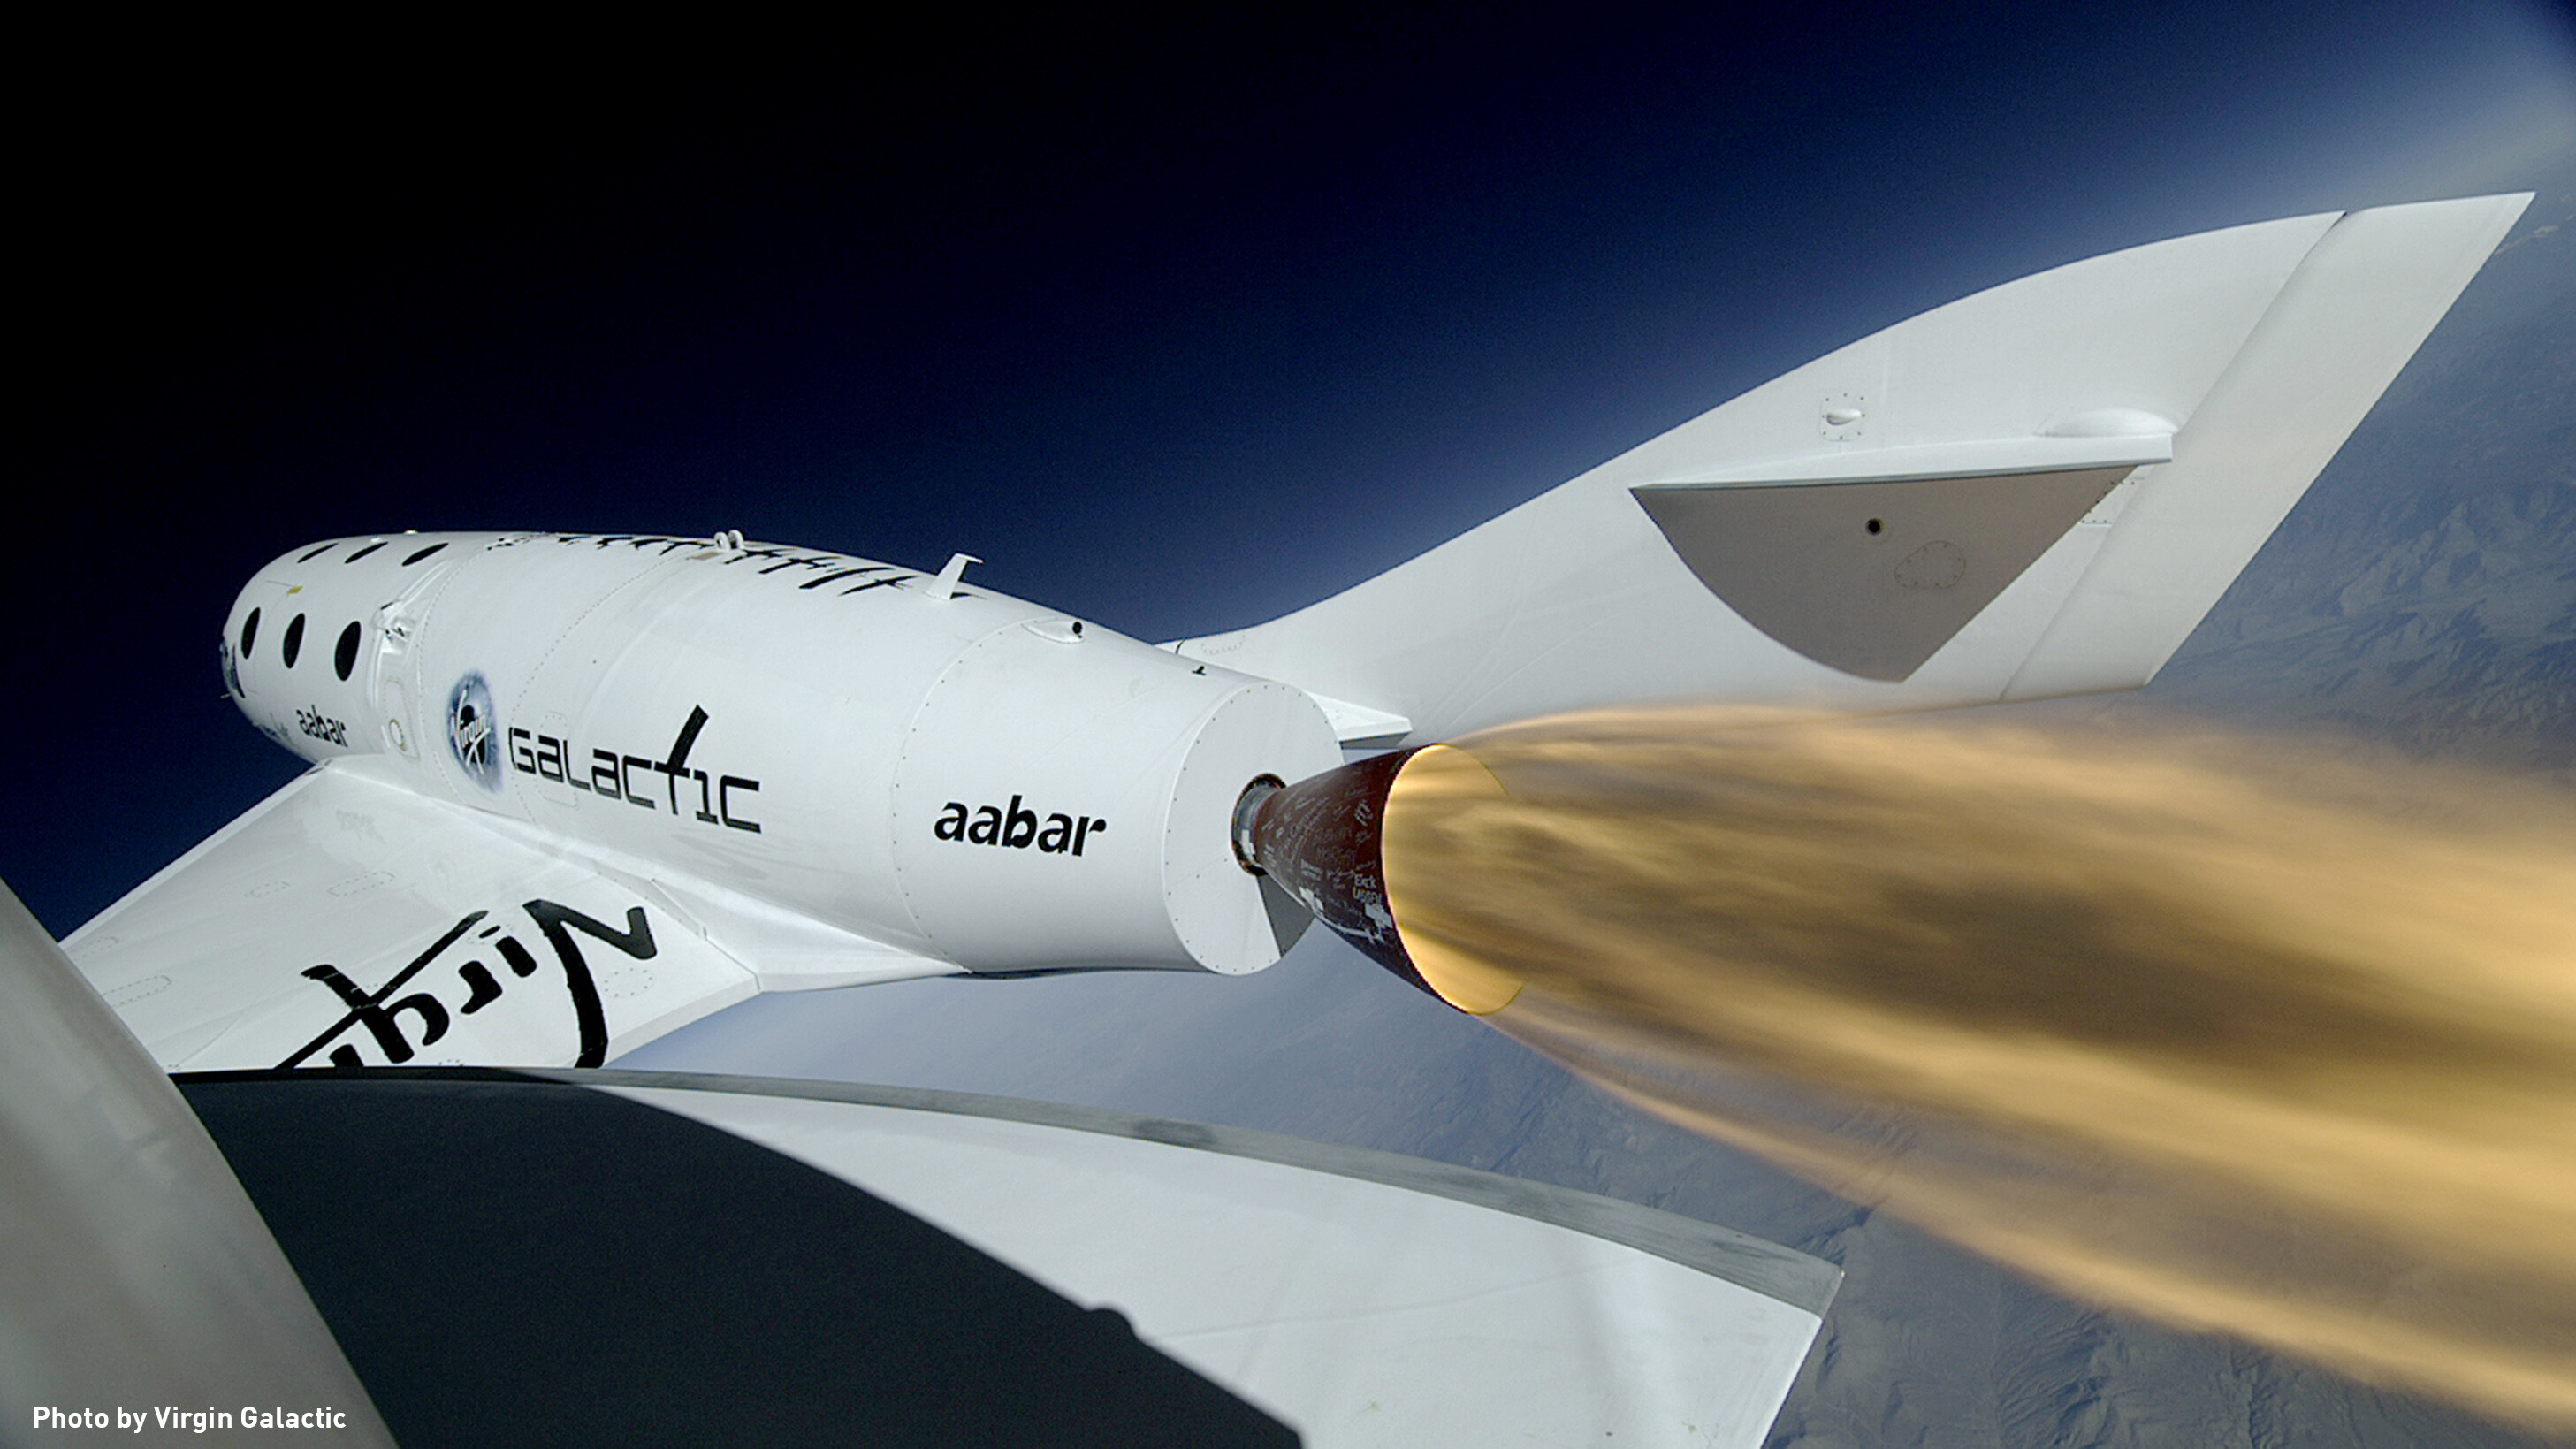 Virgin Galactic: The world's first commercial spaceline, Suborbital passenger flights. 2920x1640 HD Wallpaper.